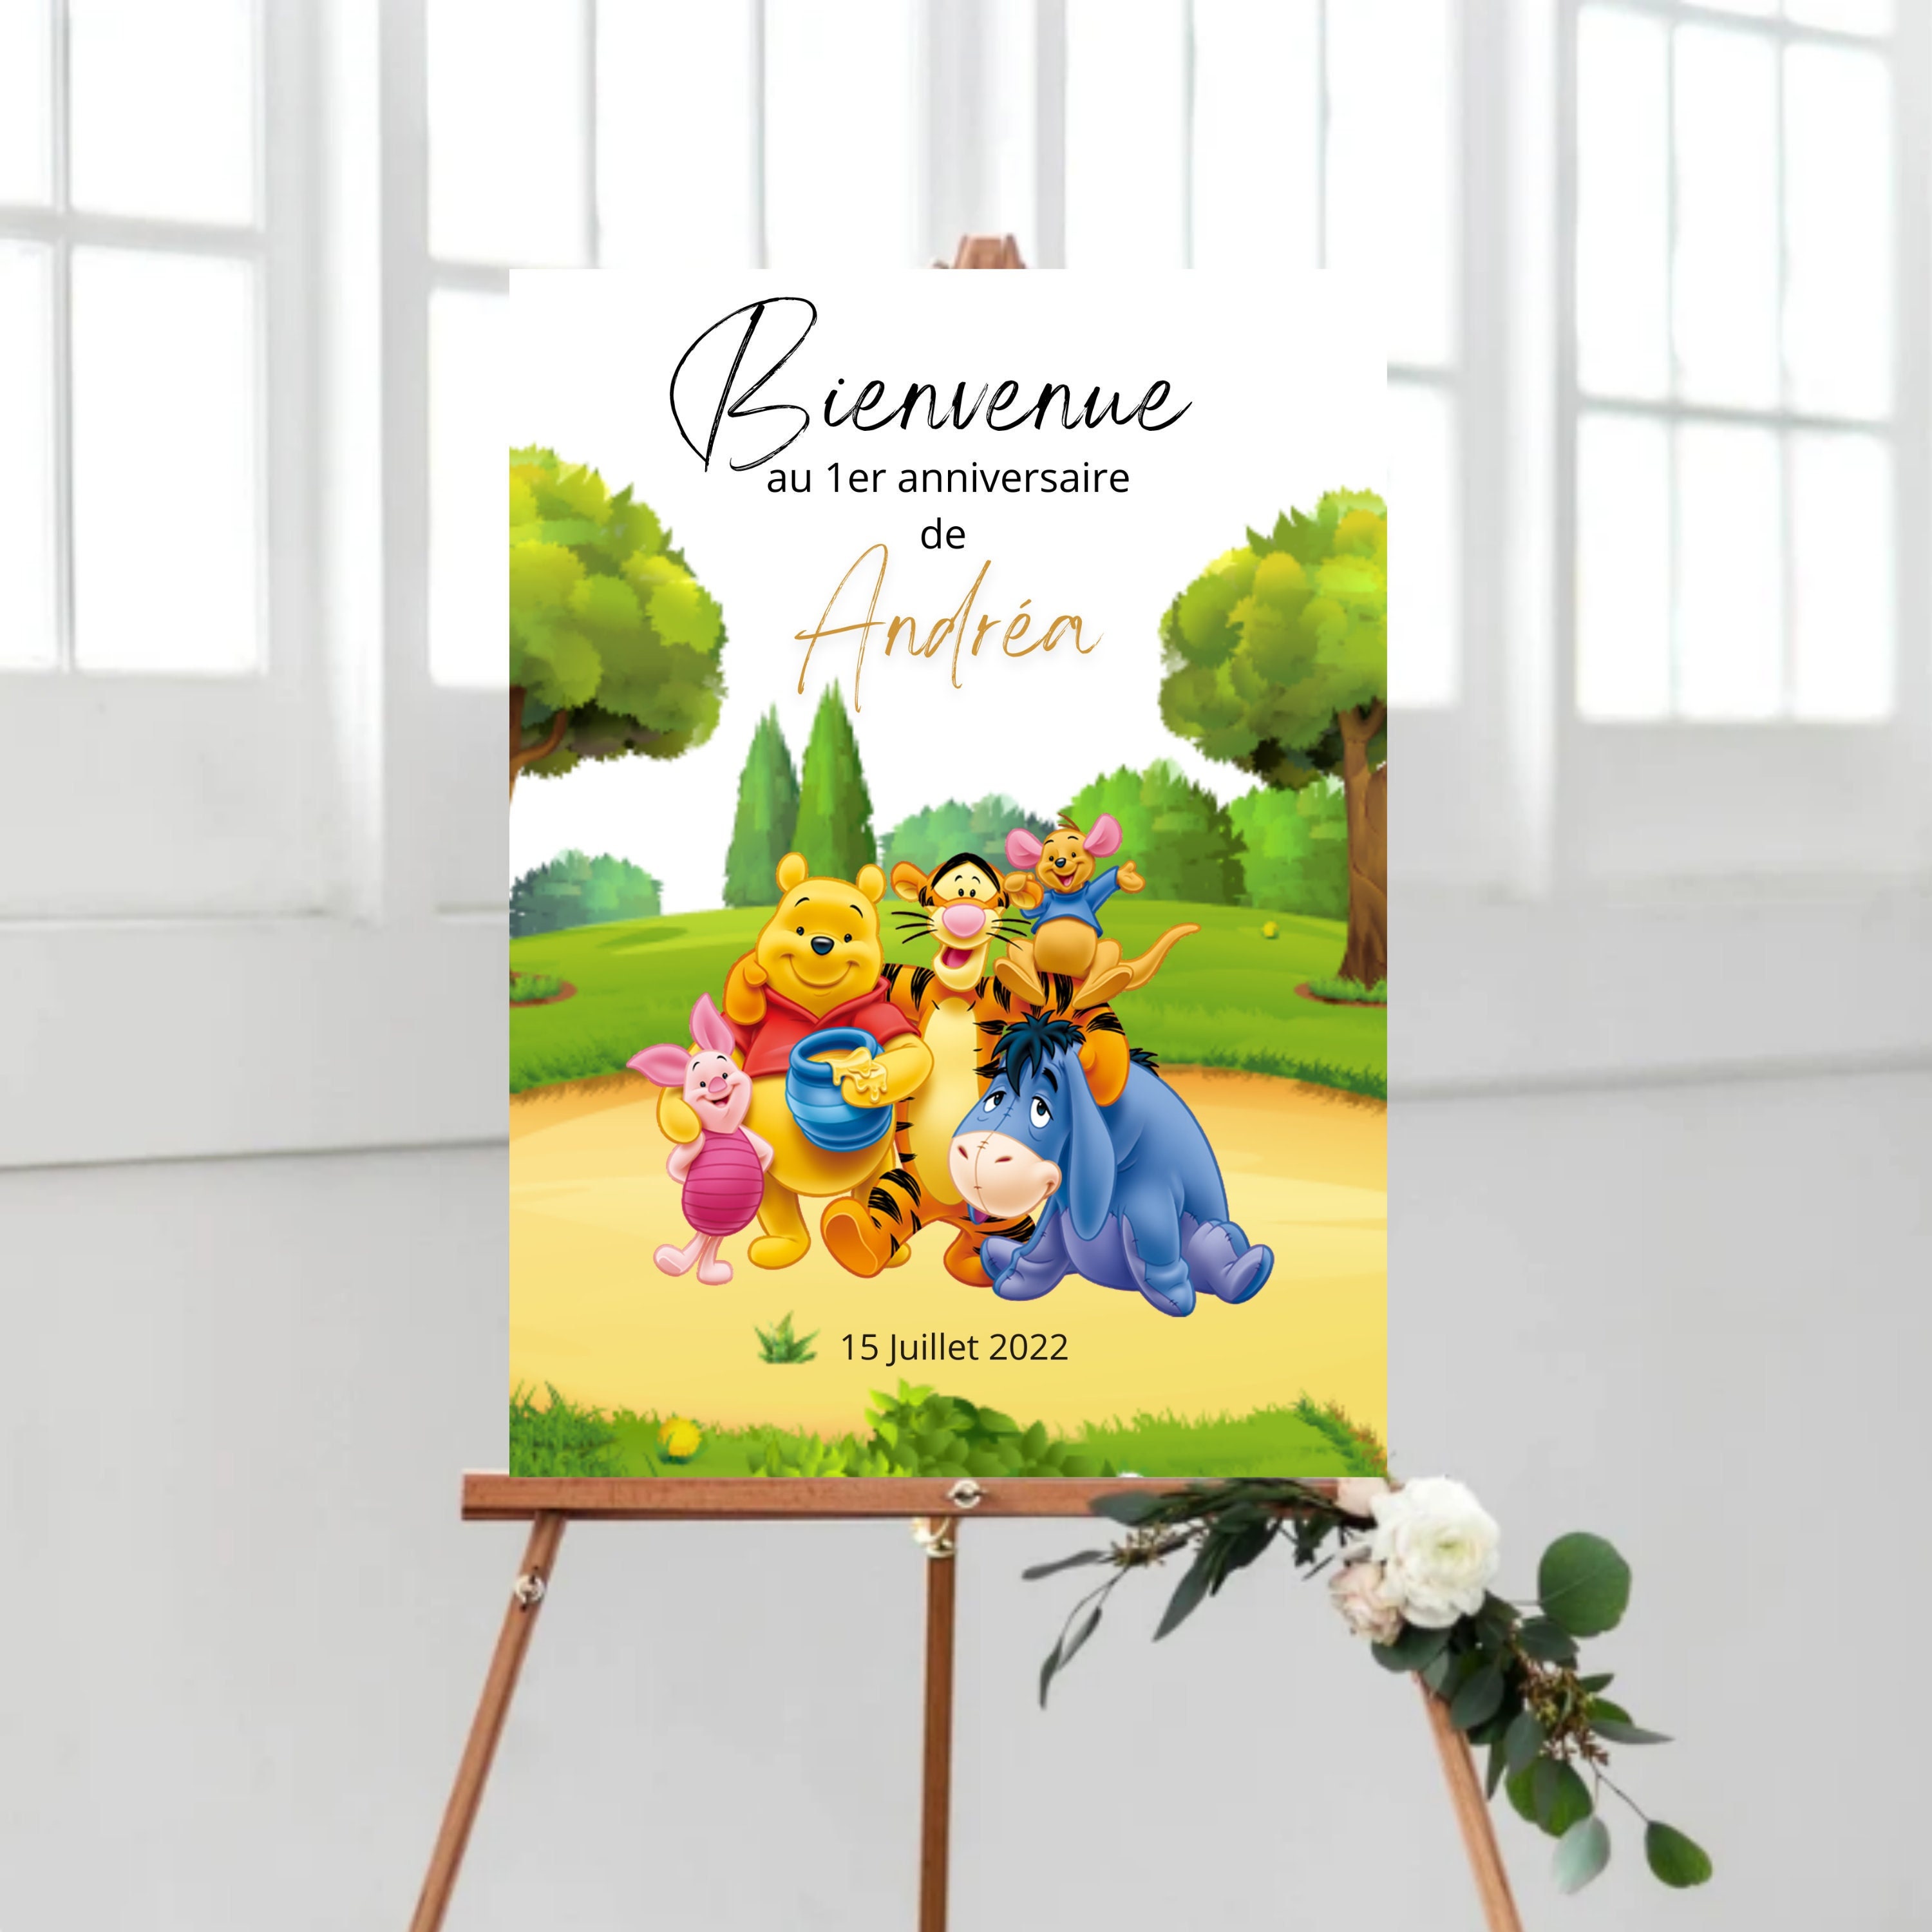 Disney Originals Winnie l'ourson set de cadeau, 39 cm, multicolore